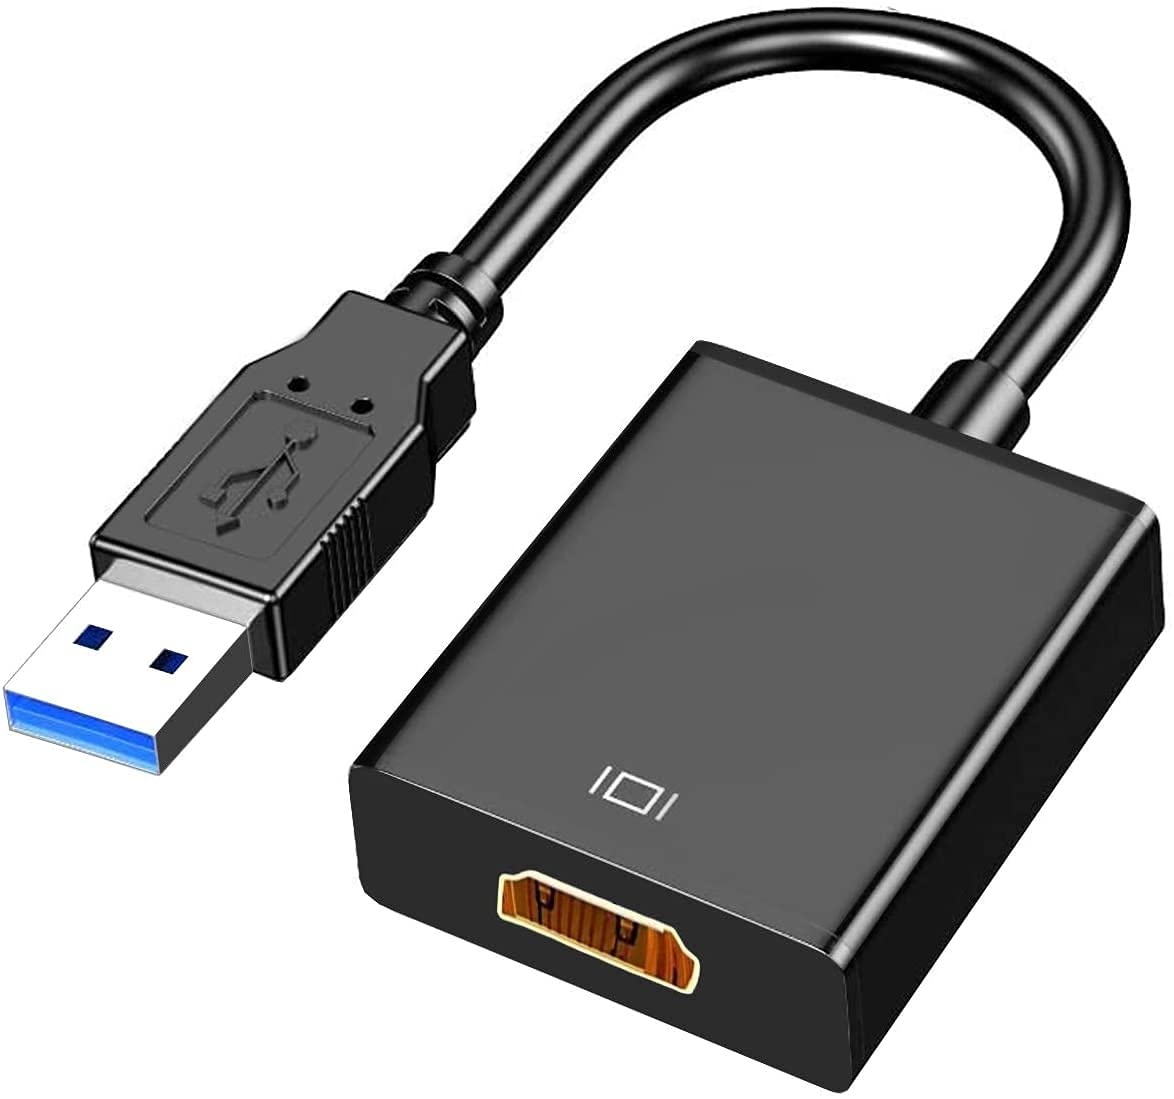 USB zu HDMI Adapter,USB 3.0/2.0 zu HDMI Adapter Konverter,HD 1080P Video Grafikkabel Konverter für PC, Laptop HDTV TV kompatibel mit Windows XP/7/8/8.1/10(NOT Für Vista, Linux, Chrome,Mac os)